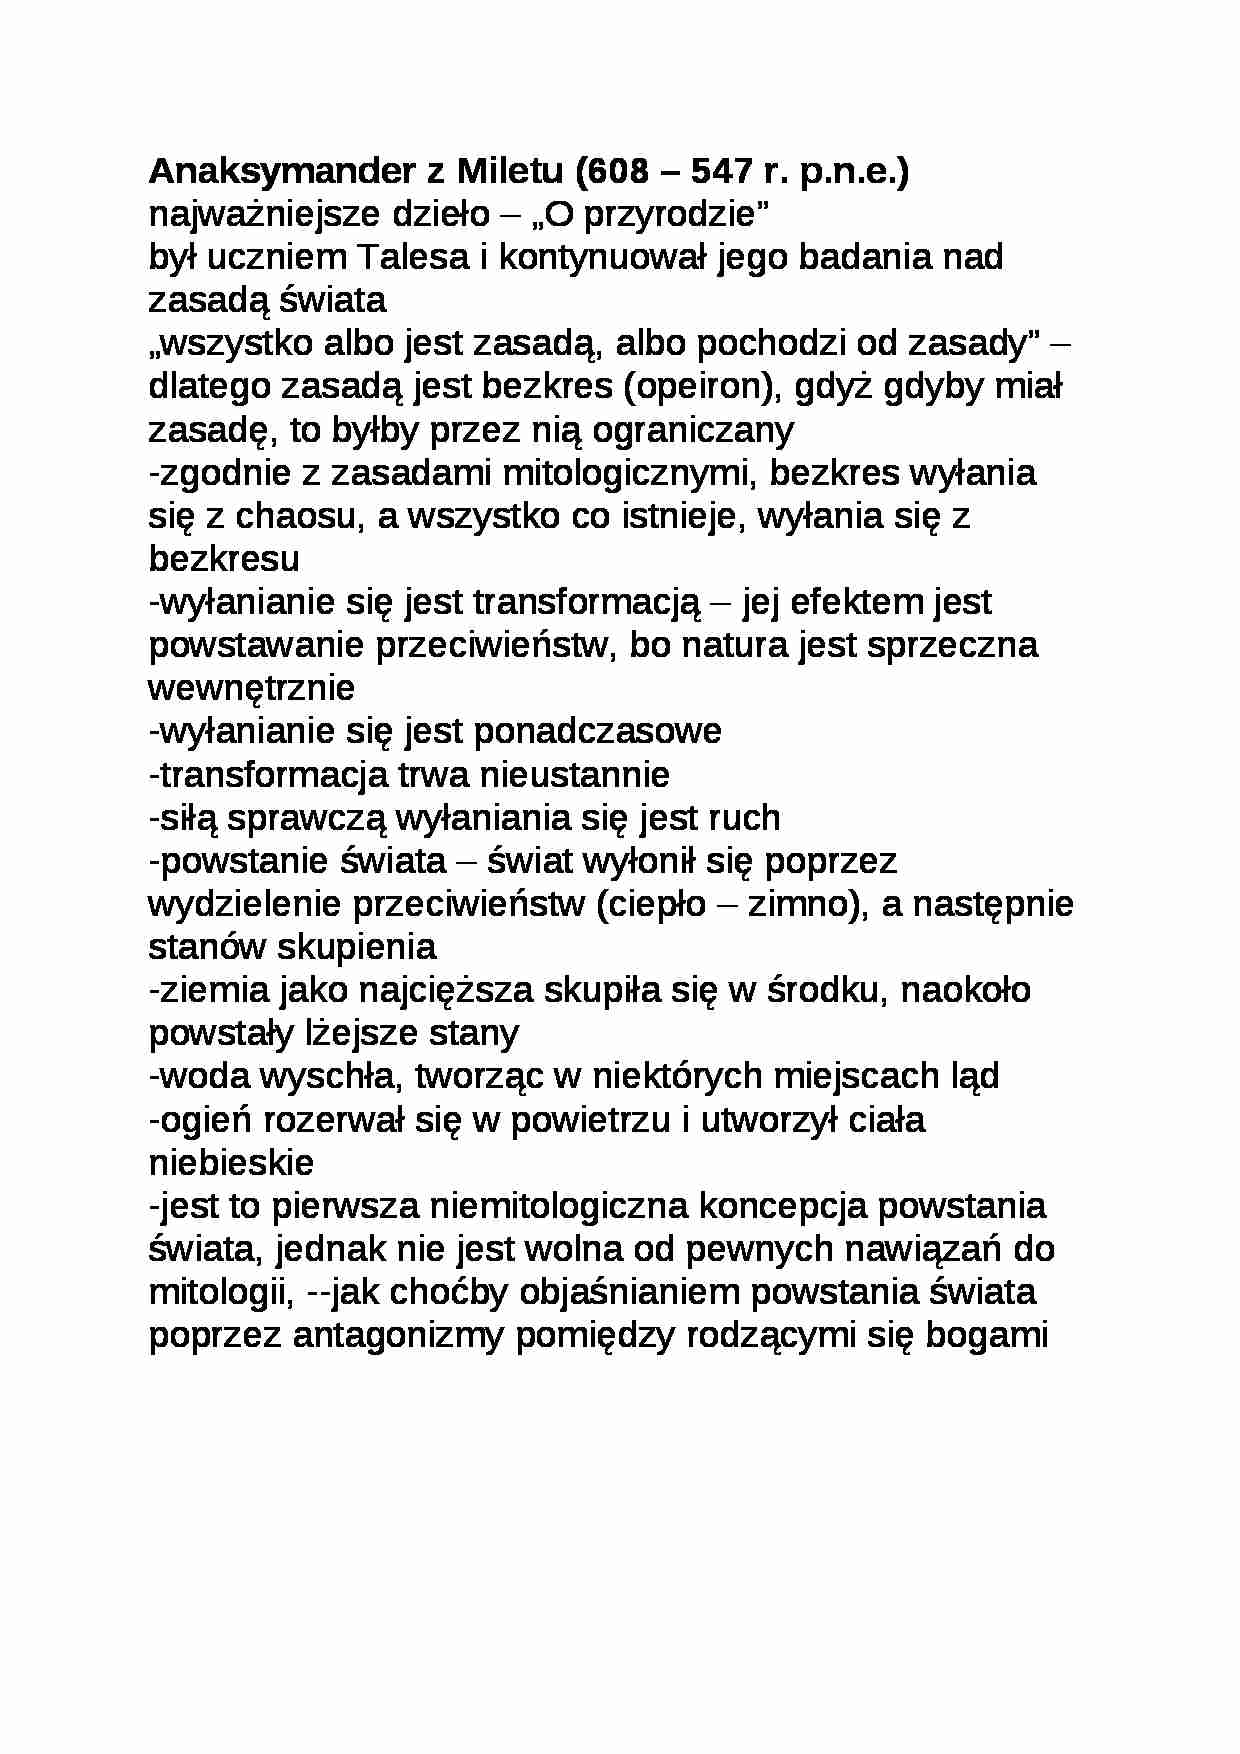 Anaksymander z Miletu - Natura - strona 1